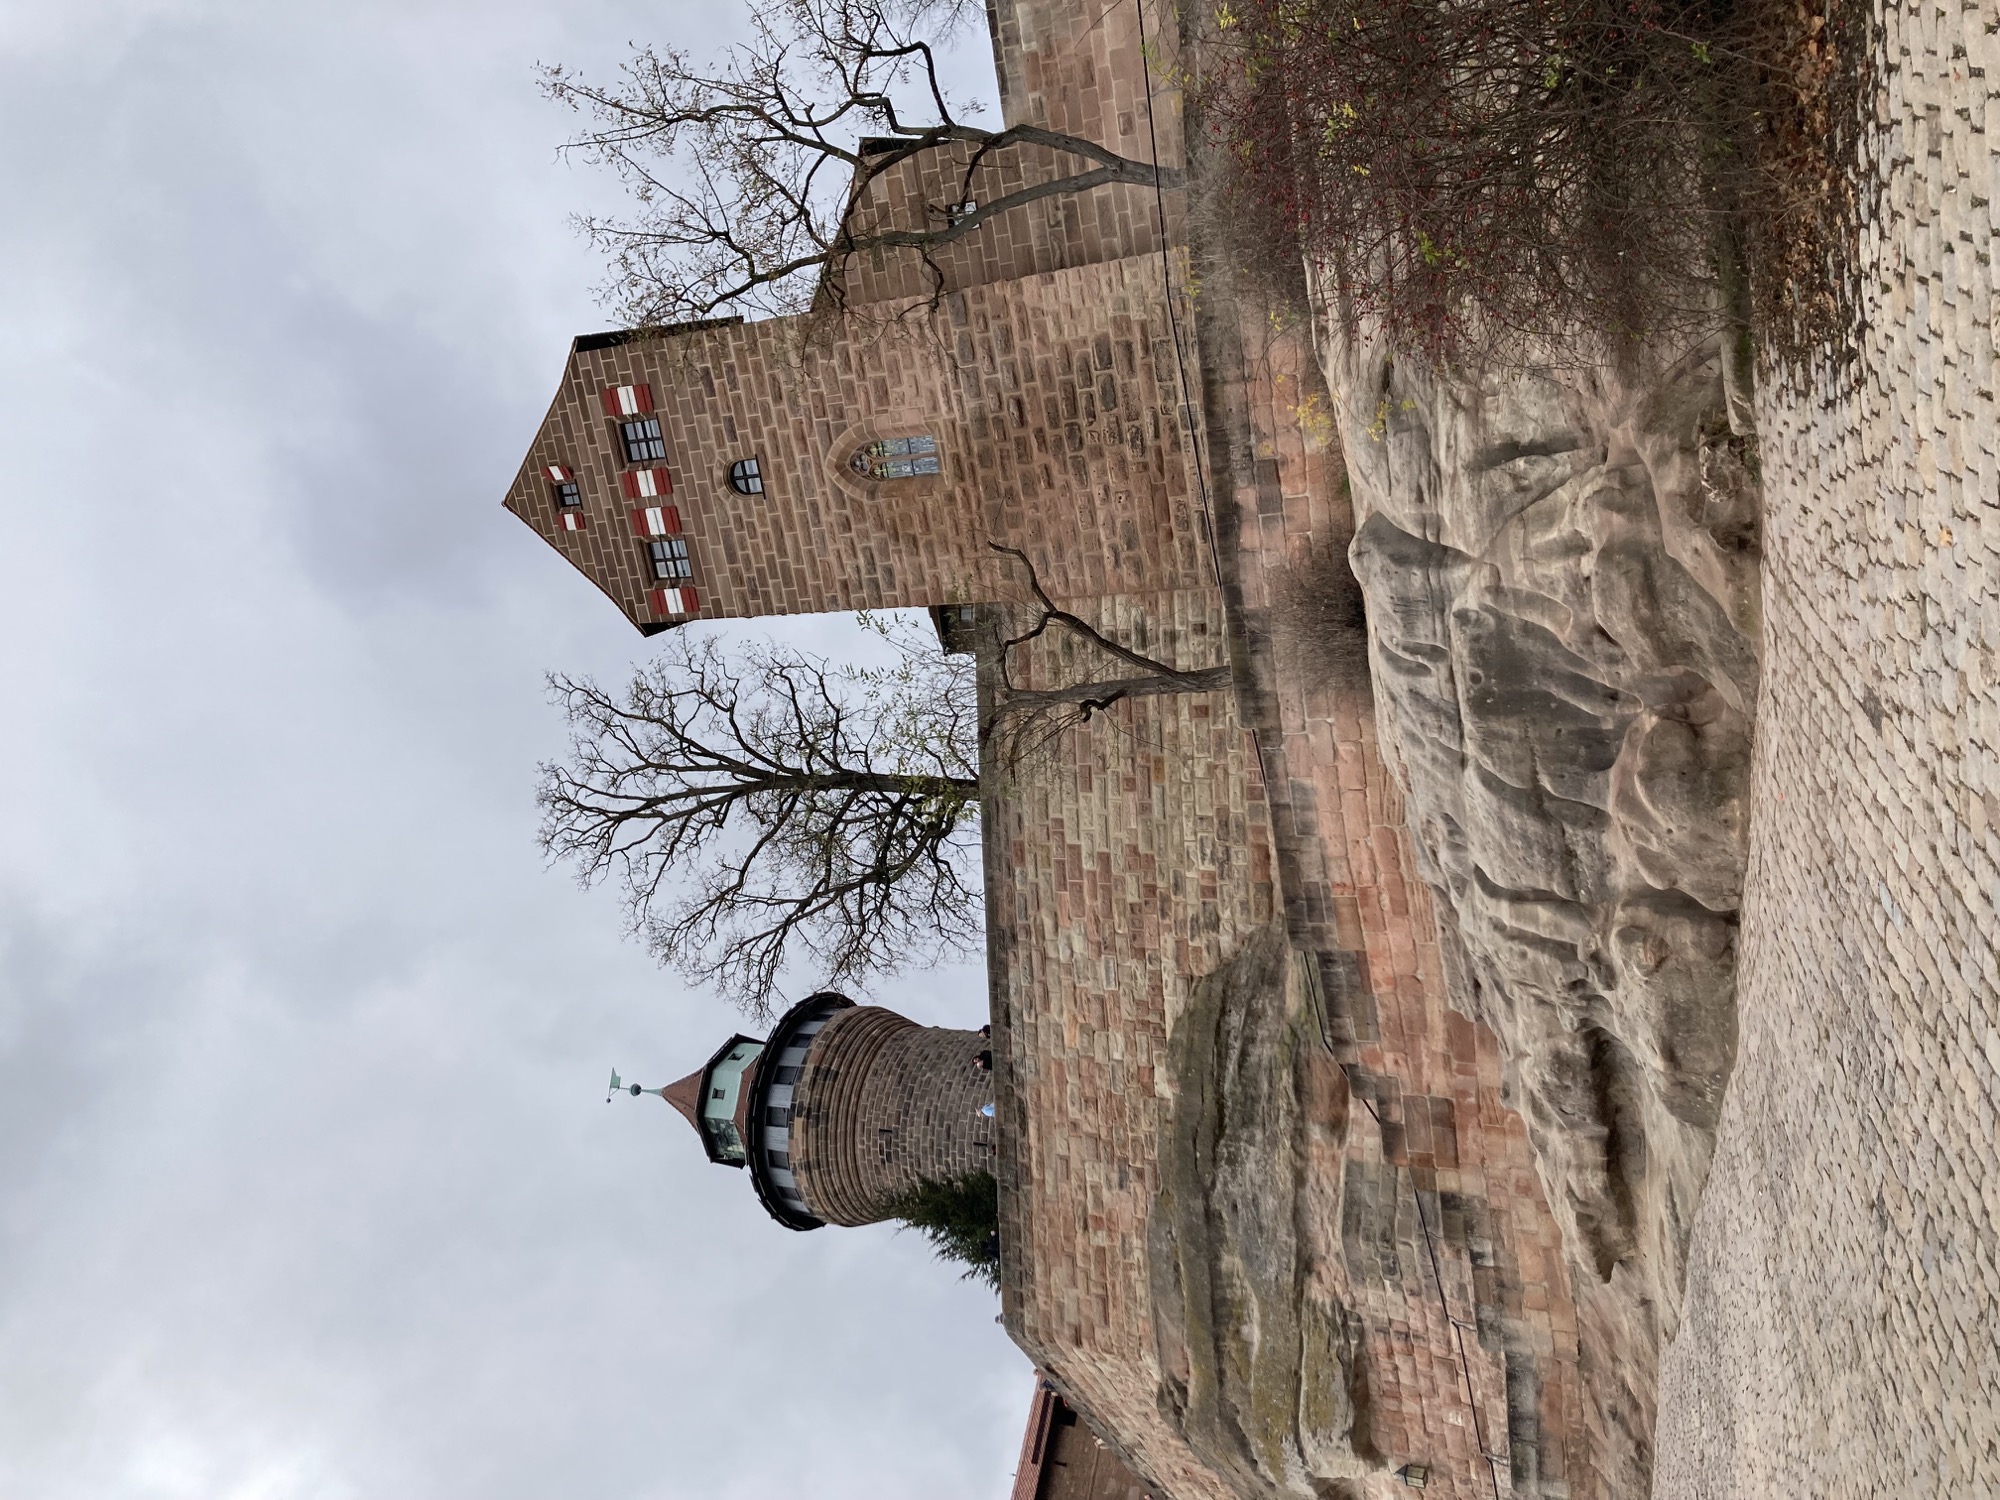 Nürnberger Burg auf einem Sandsteinfelsen, links der Sinnwellturm